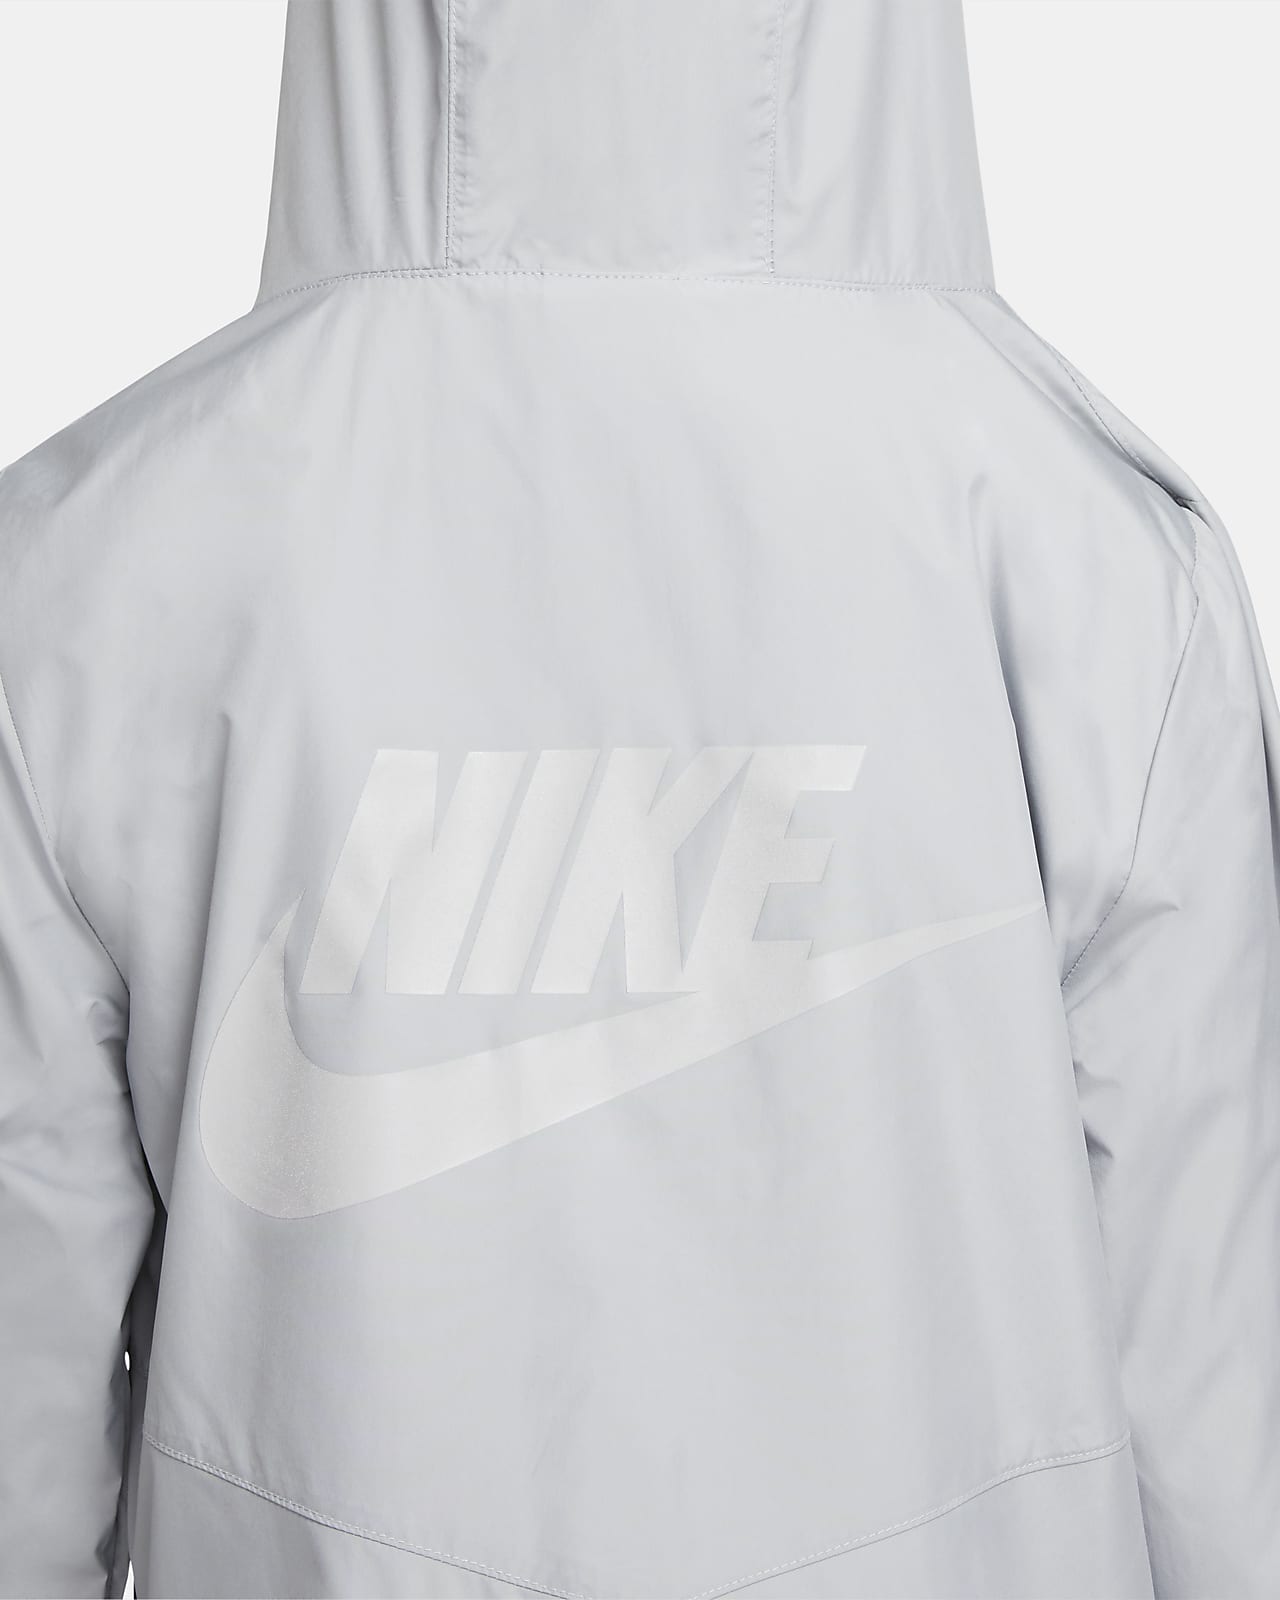 Nike Sportswear Utility (Boys\') Kids\' Kids Jacket. Big Pack